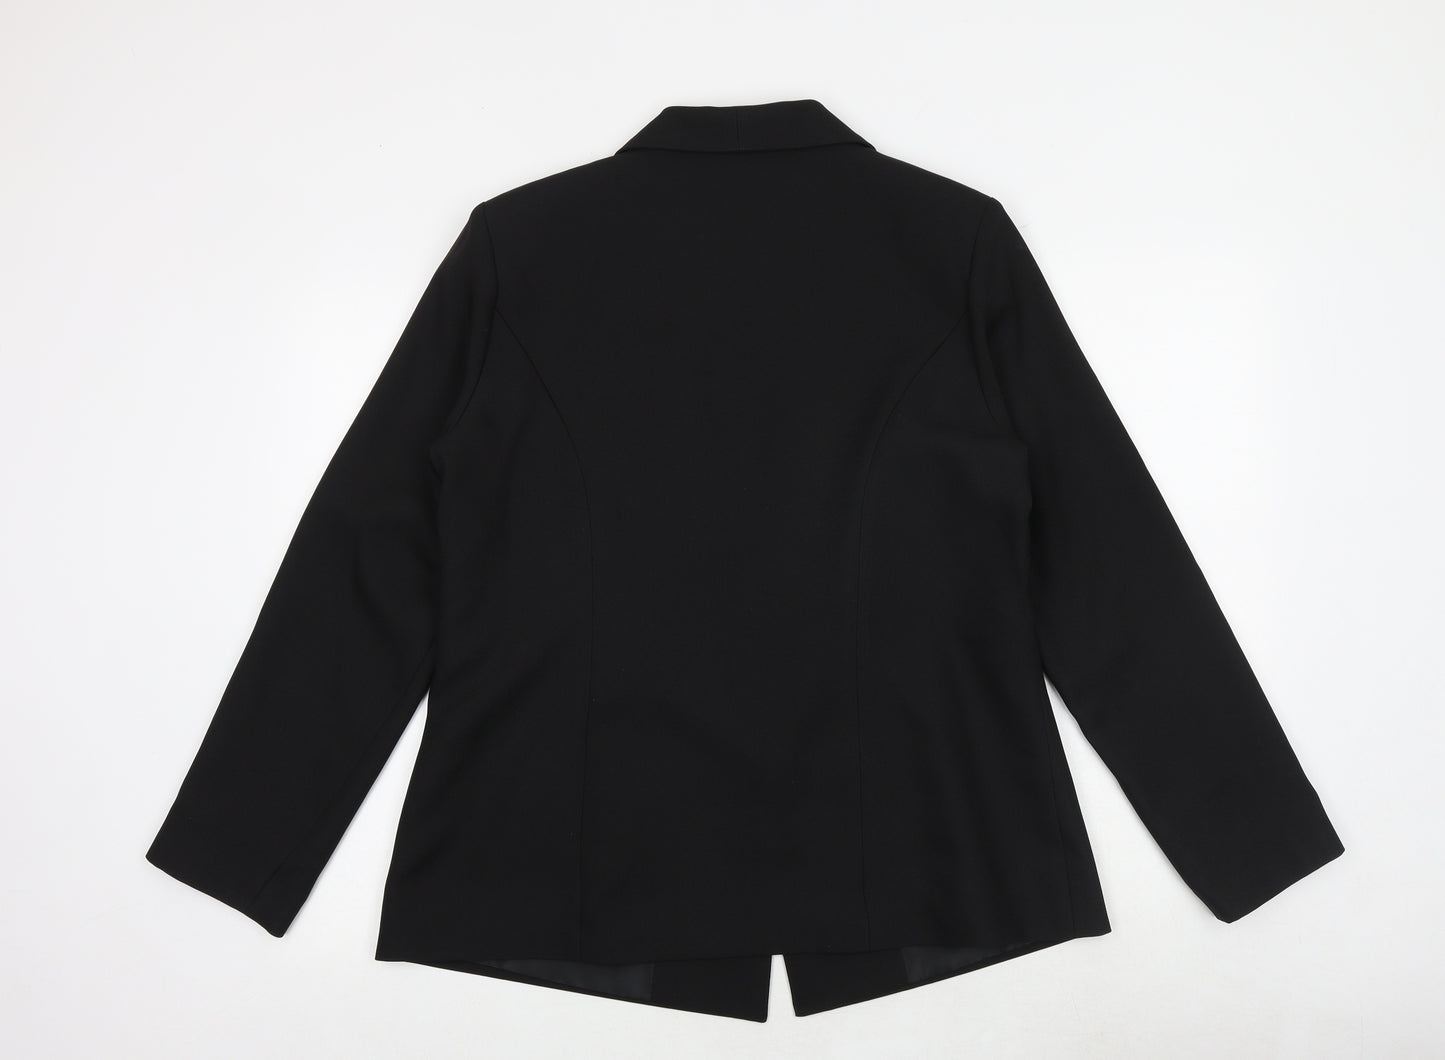 Damart Womens Black Polyester Jacket Suit Jacket Size 16